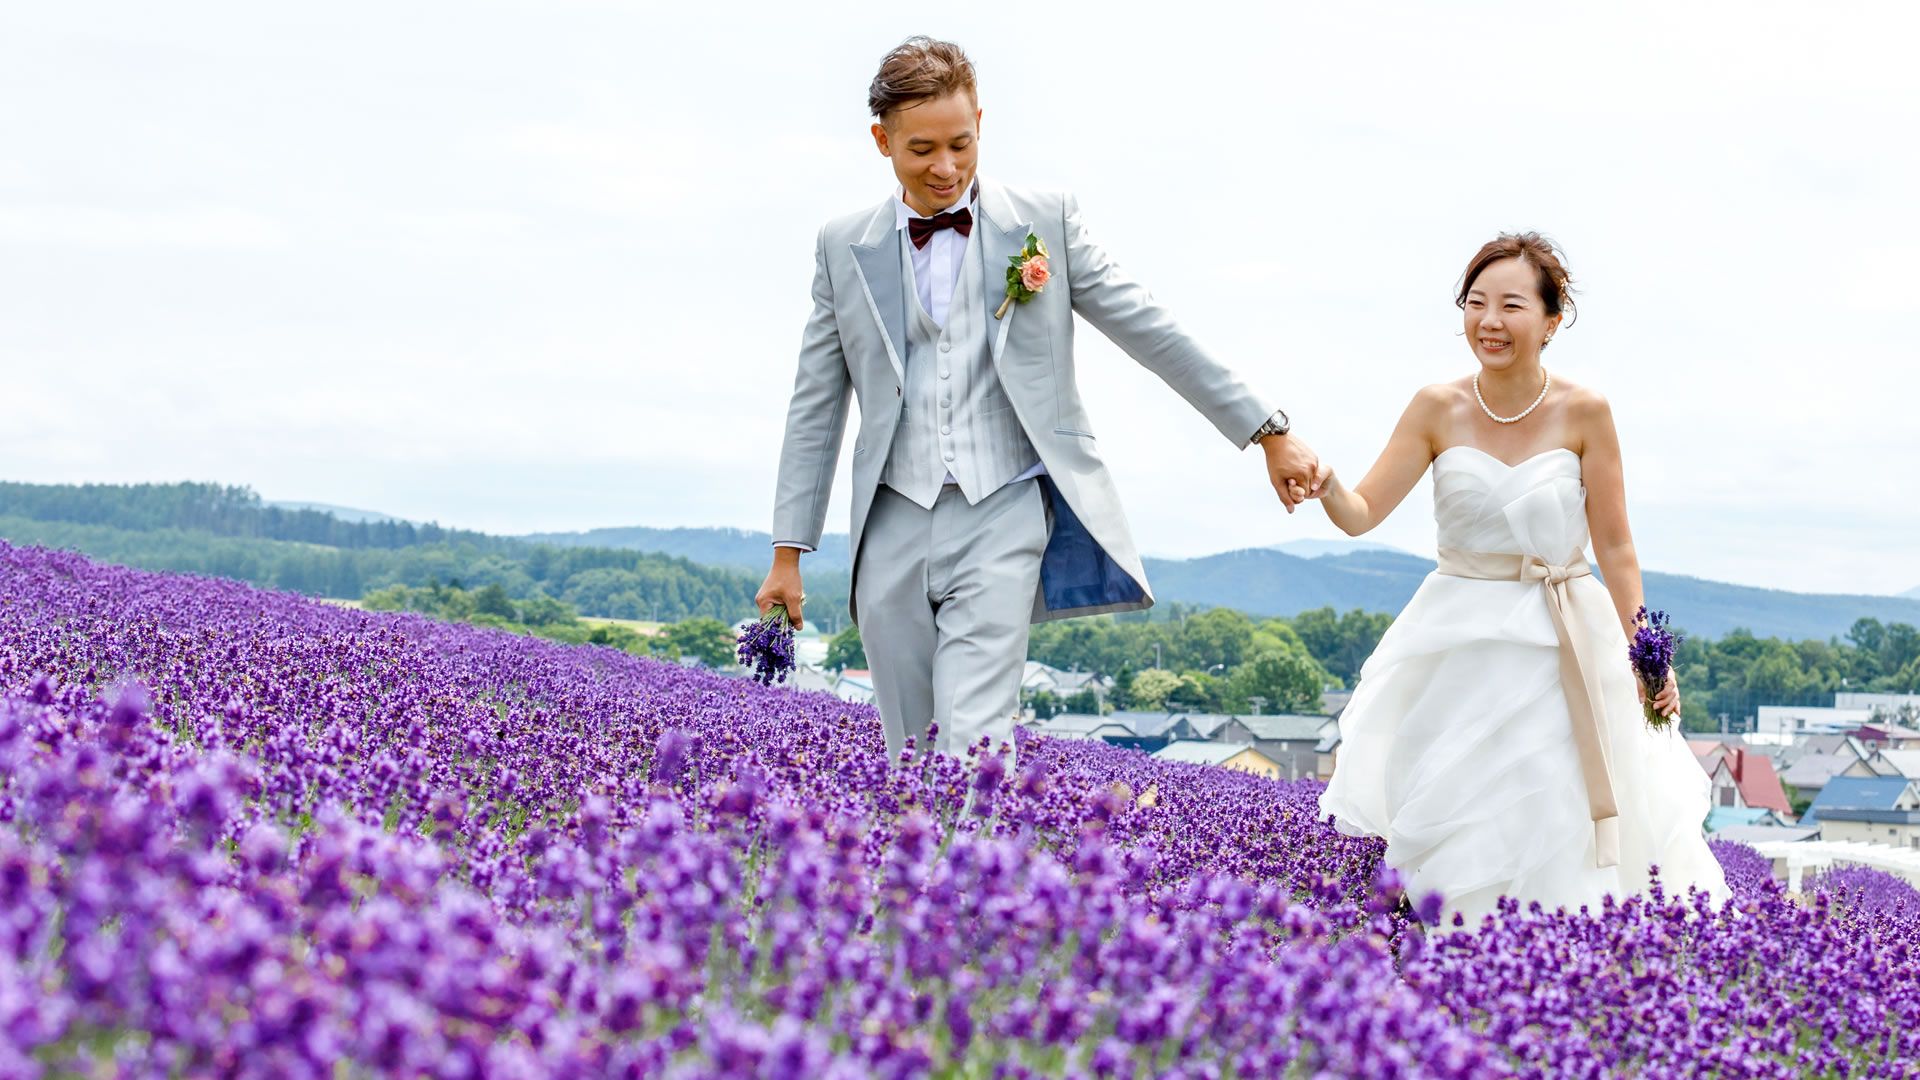 Behind-The-Scenes of 21st Wedding Anniversary Photoshoot